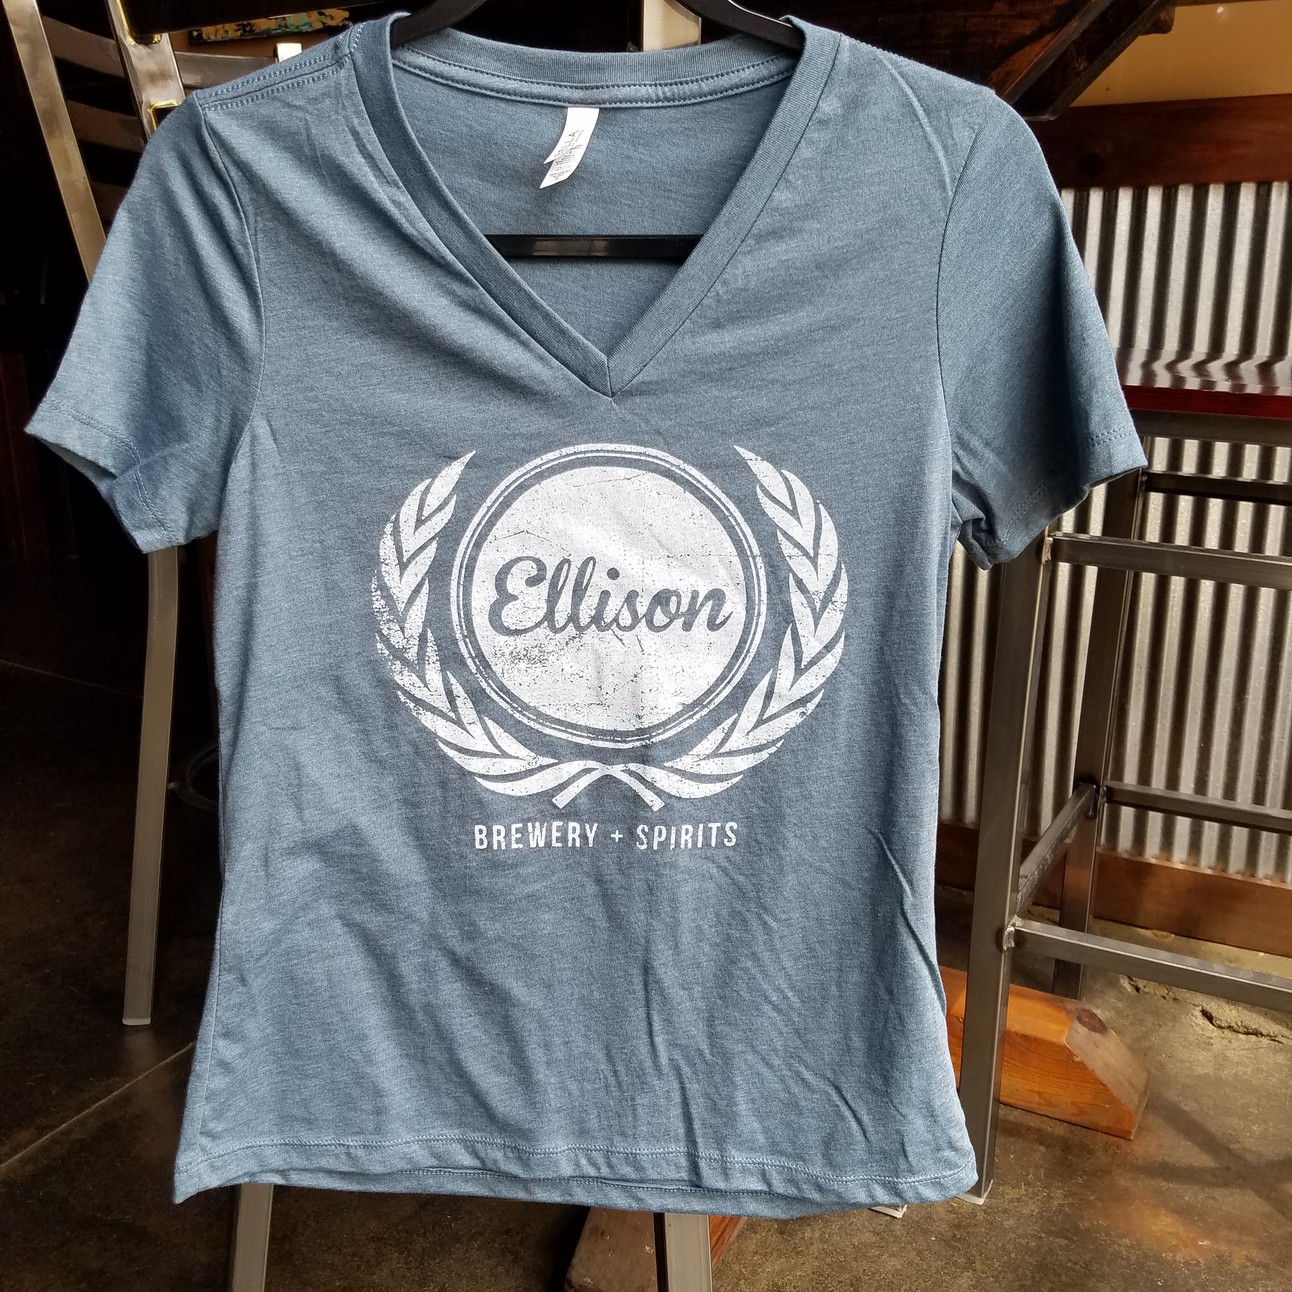 Ellison Brewery + Spirits – Craft Beer, craft spirits and great food!